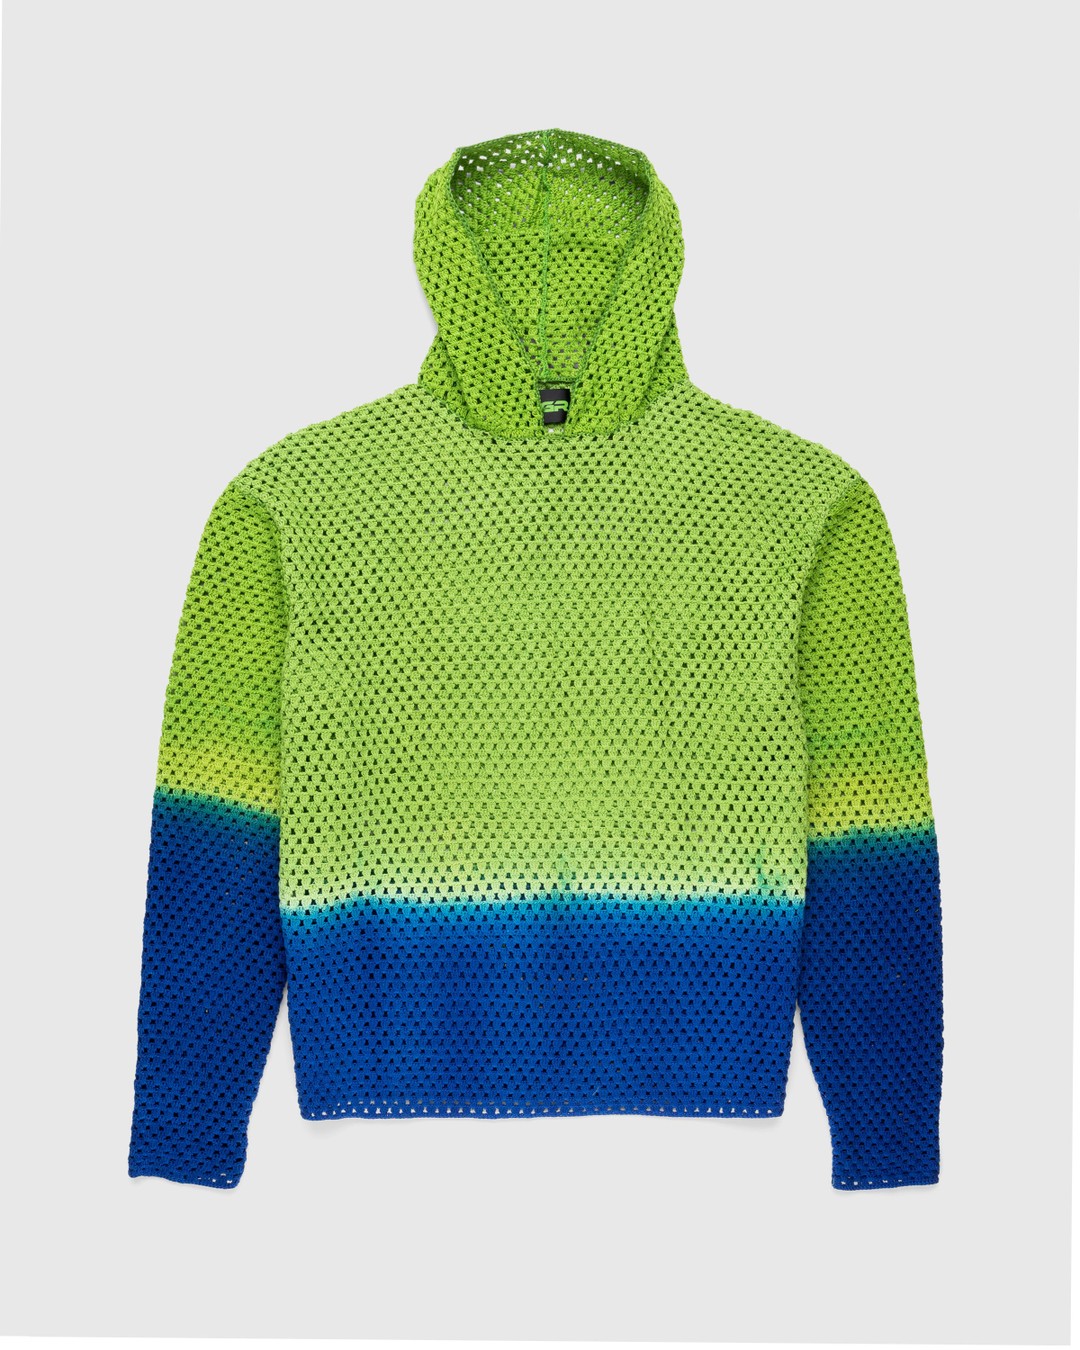 AGR – Balance + Growth Crochet Hoodie Green/Blue - Sweats - Green - Image 1